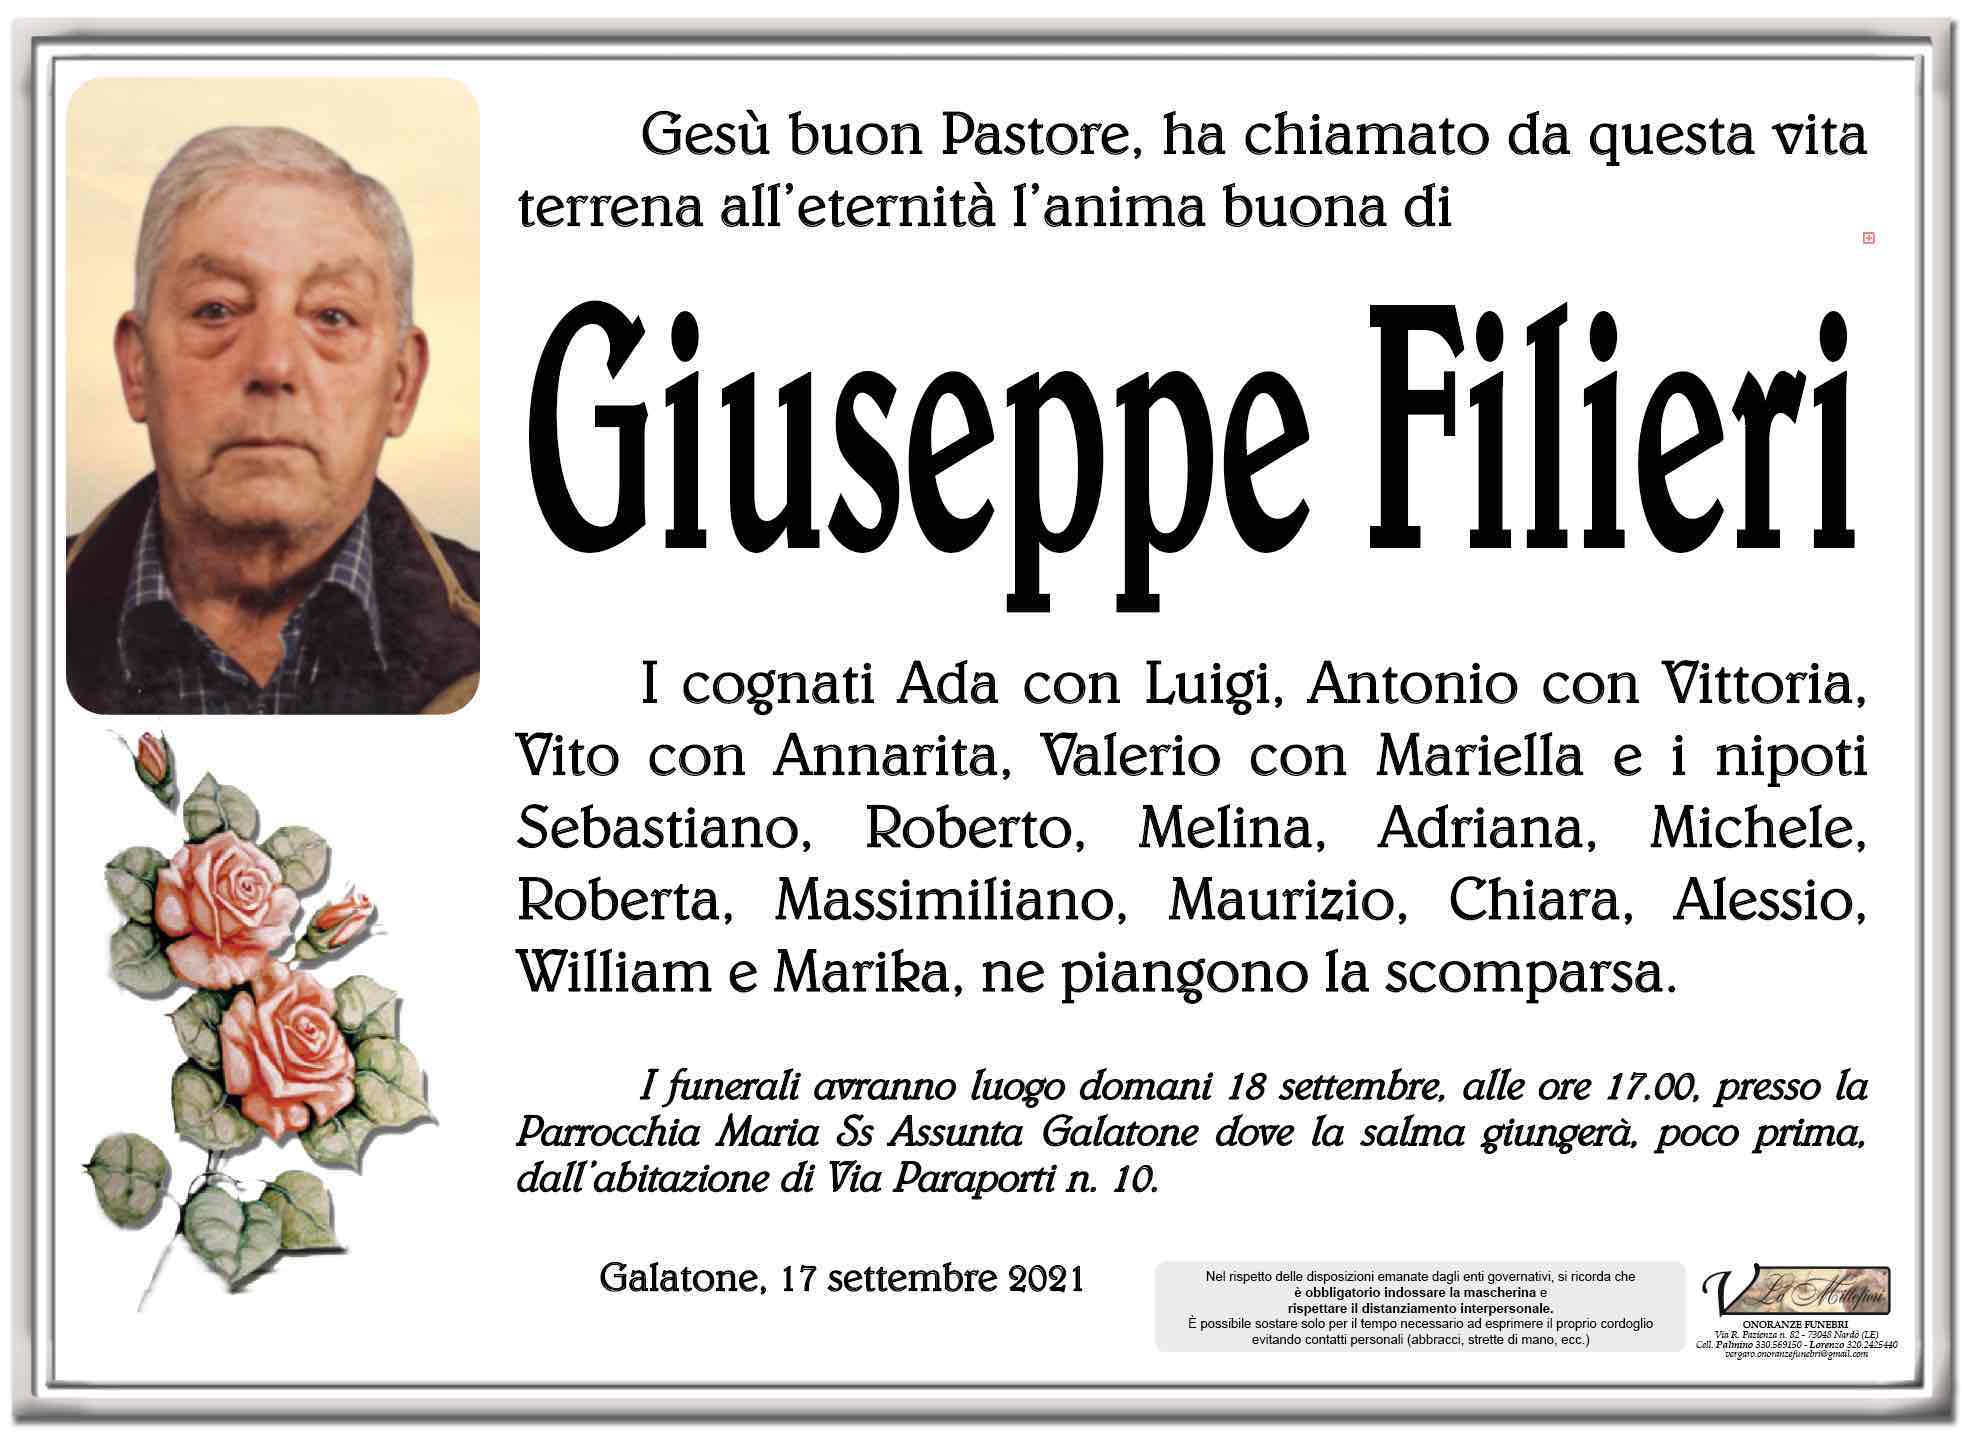 Giuseppe Filieri